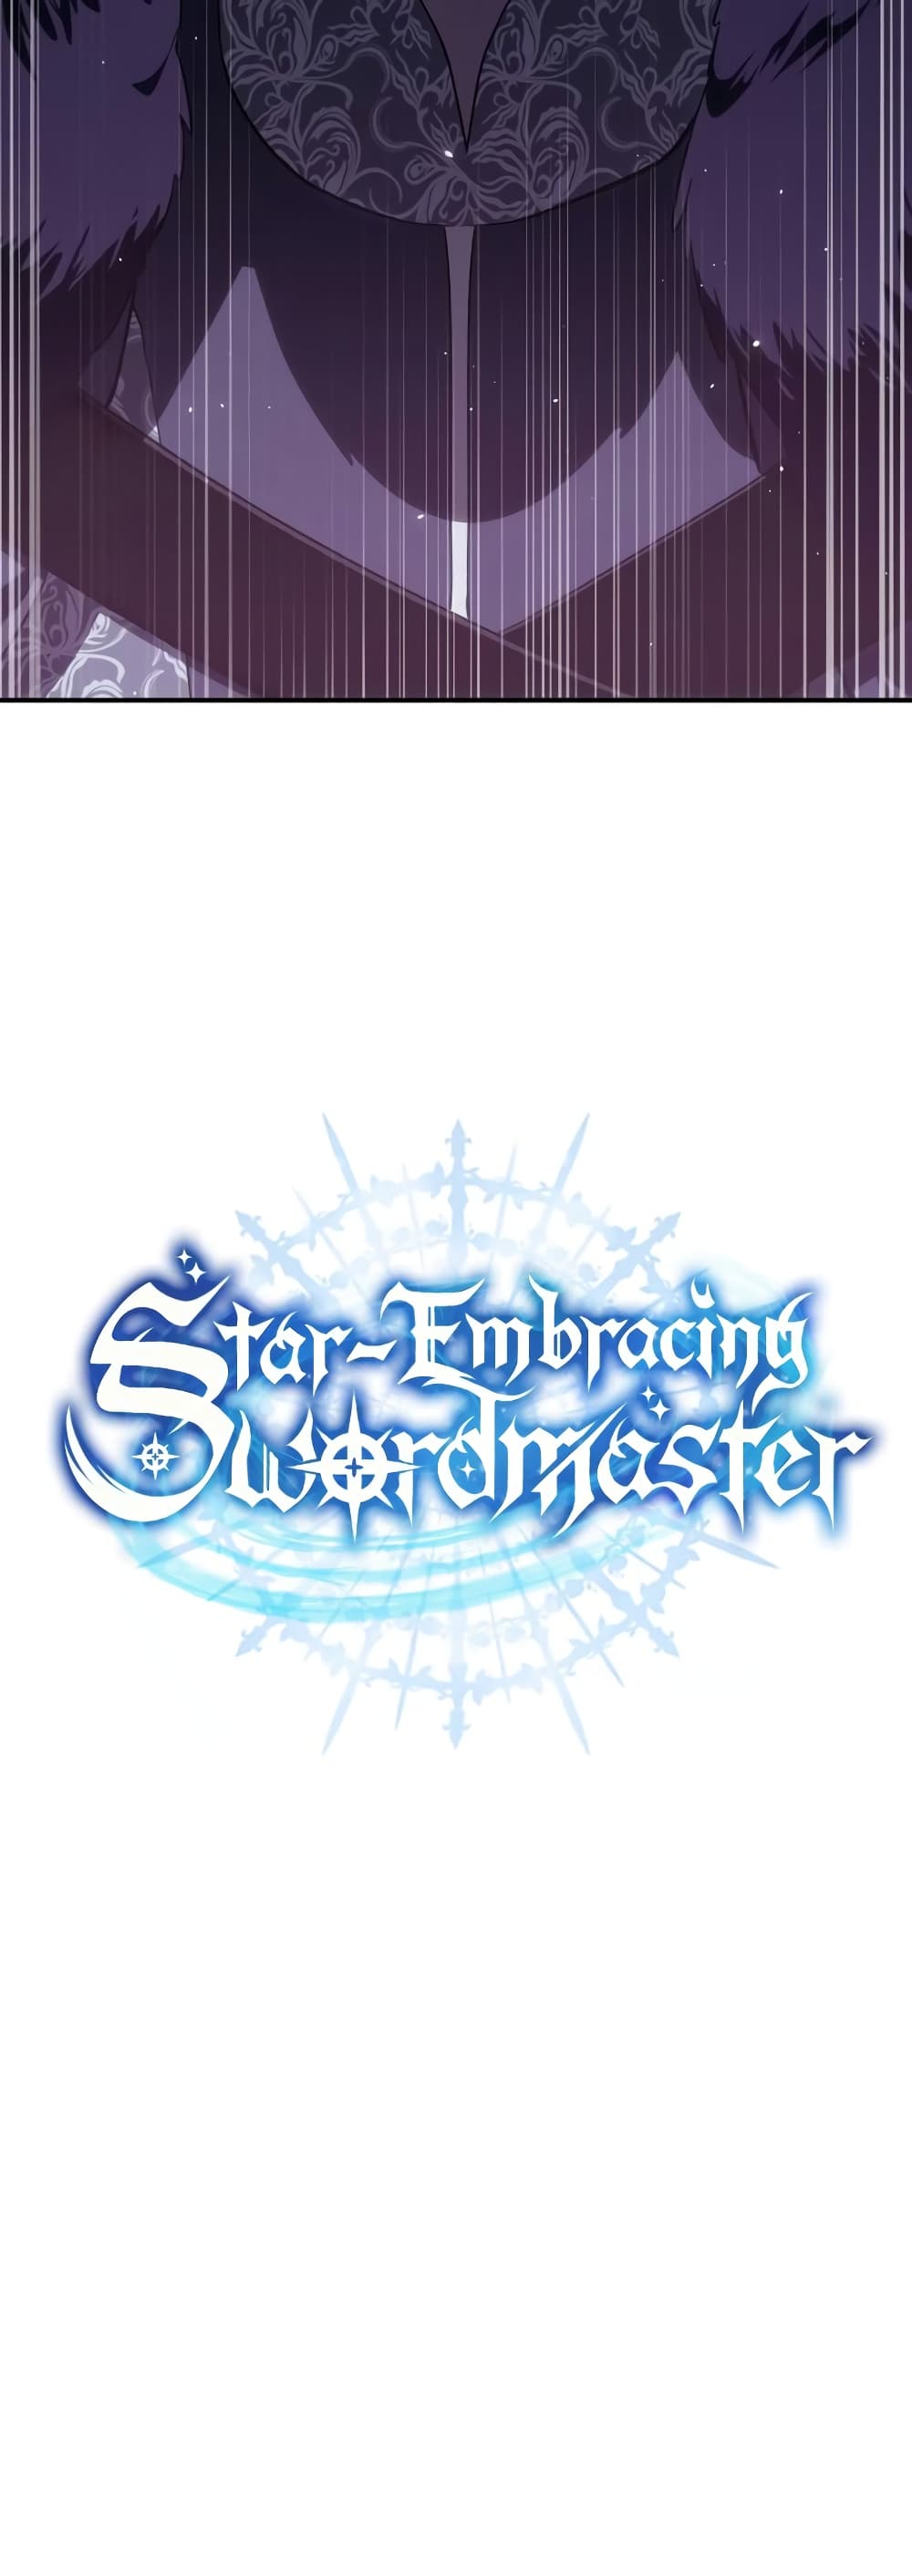 Star-Embracing Swordmaster 10-10